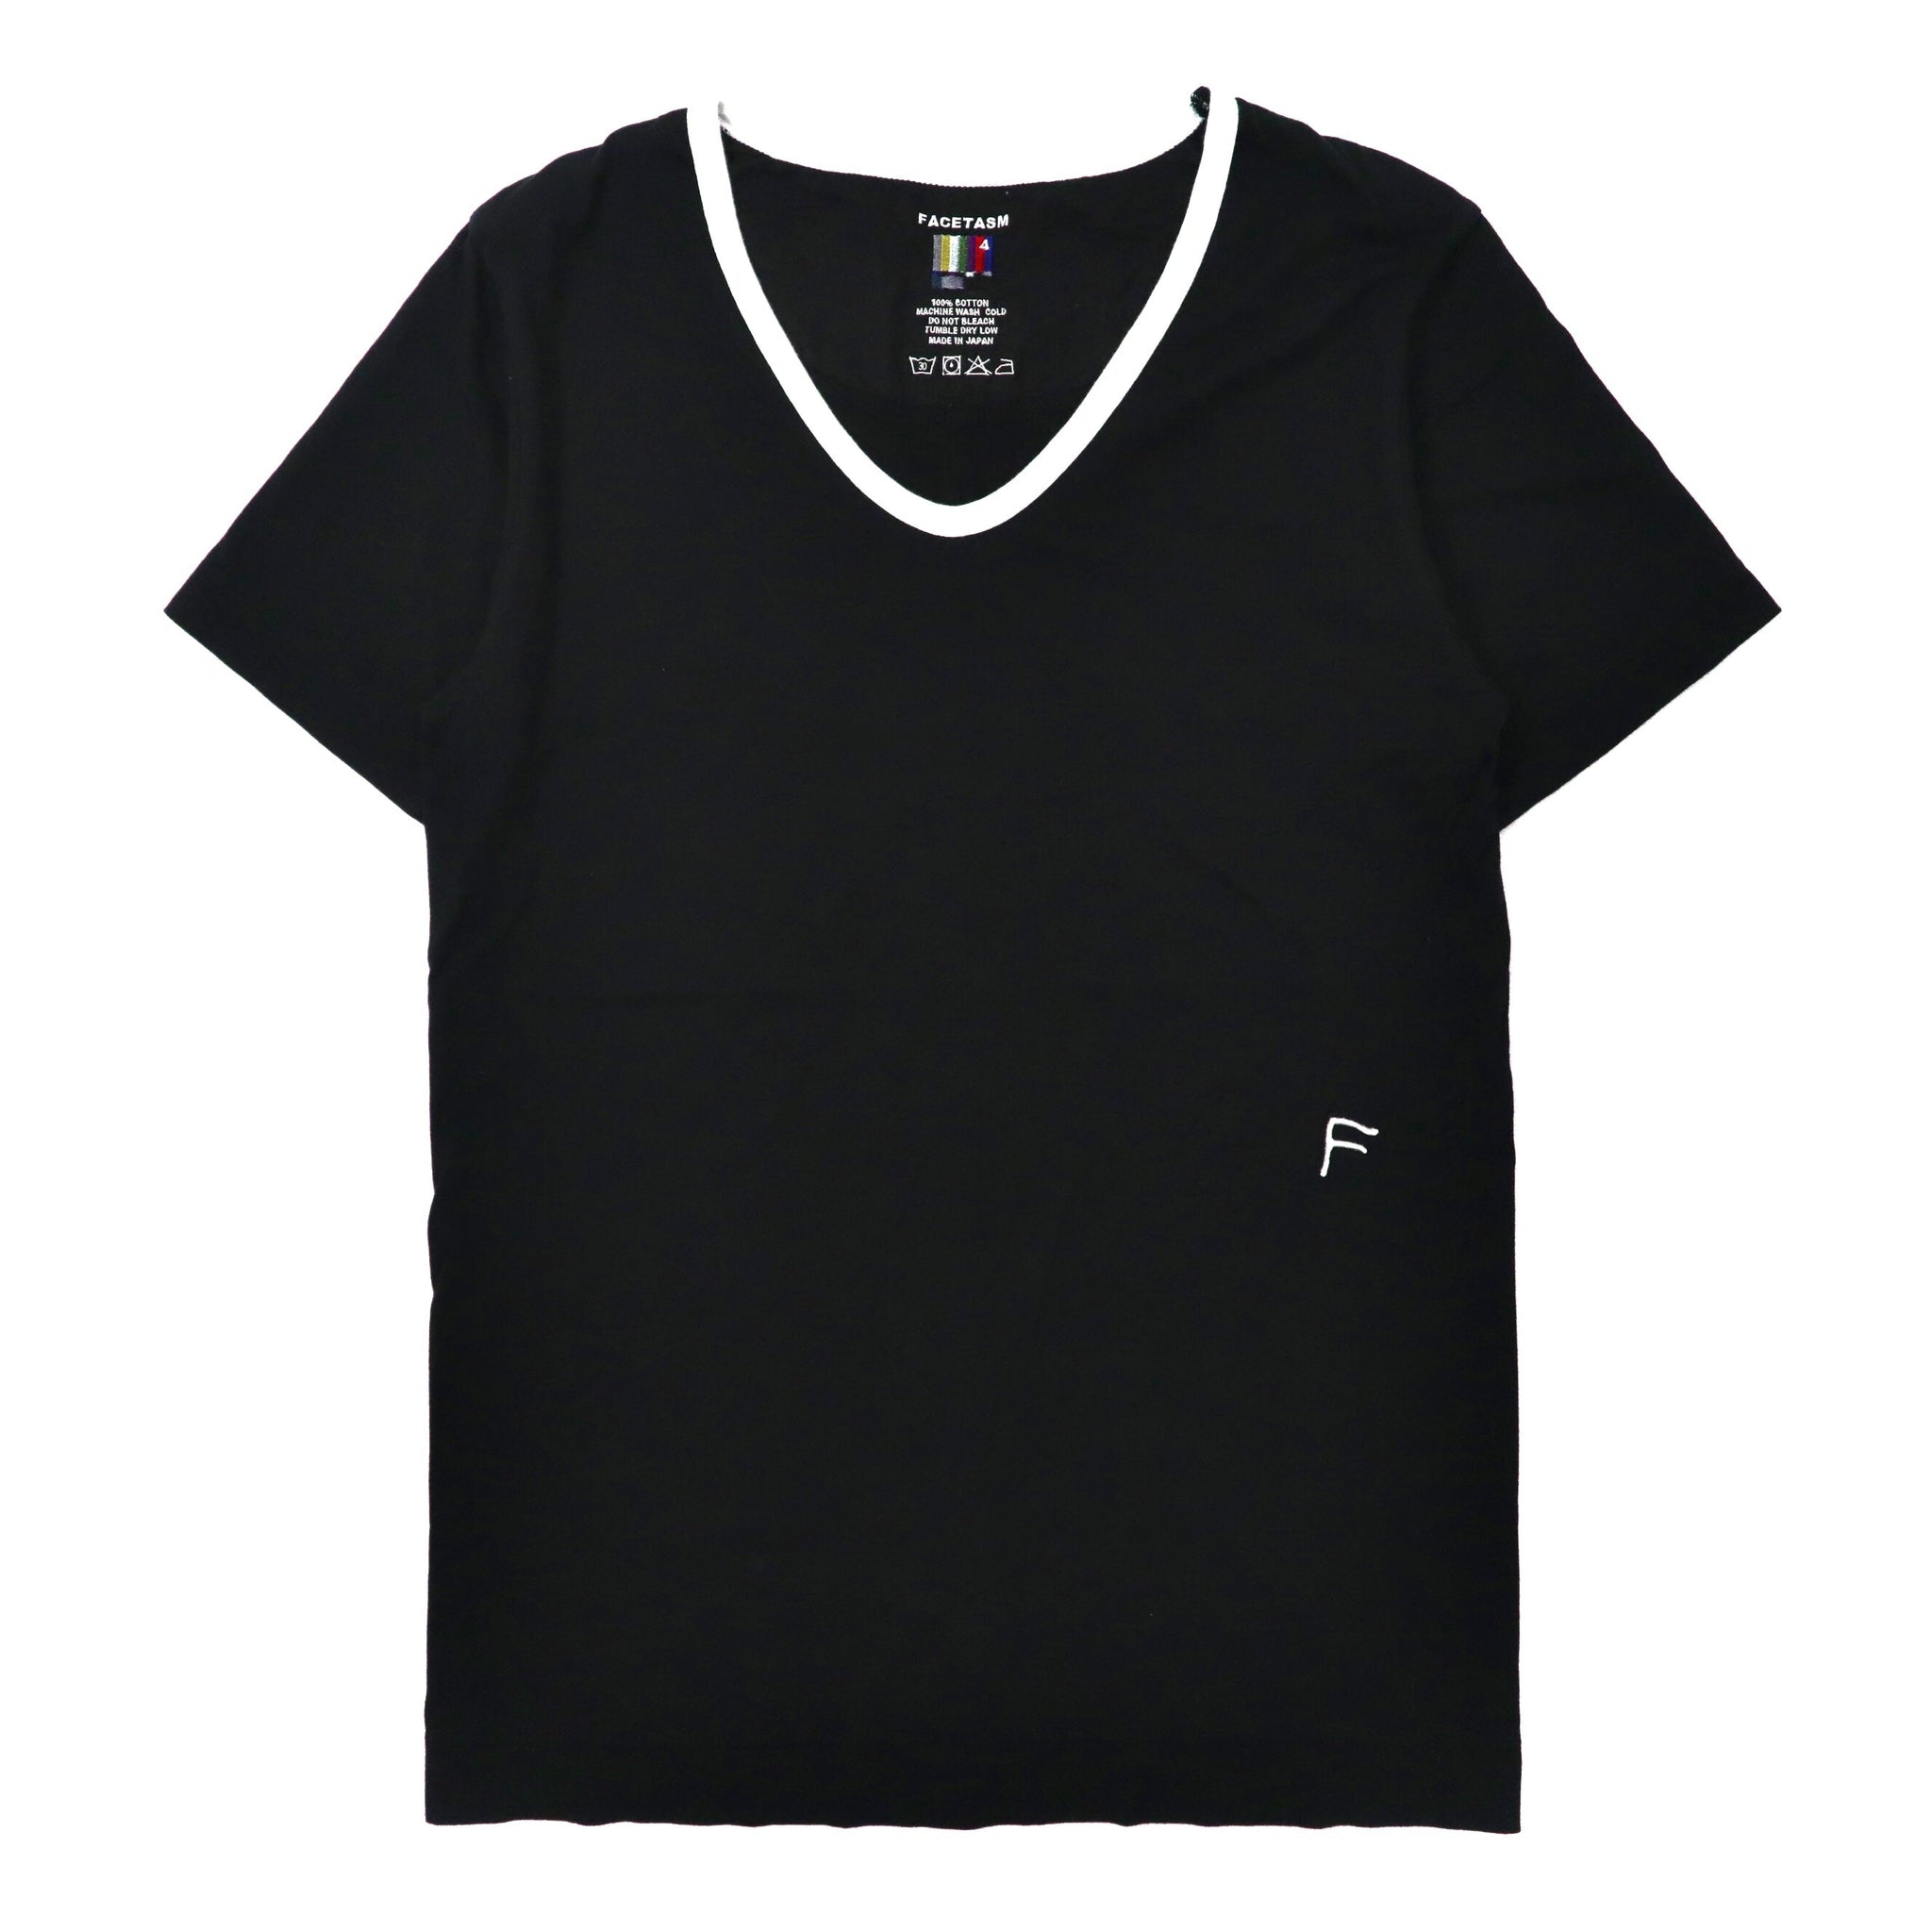 FACETASM VネックTシャツ 4 ブラック コットン 日本製